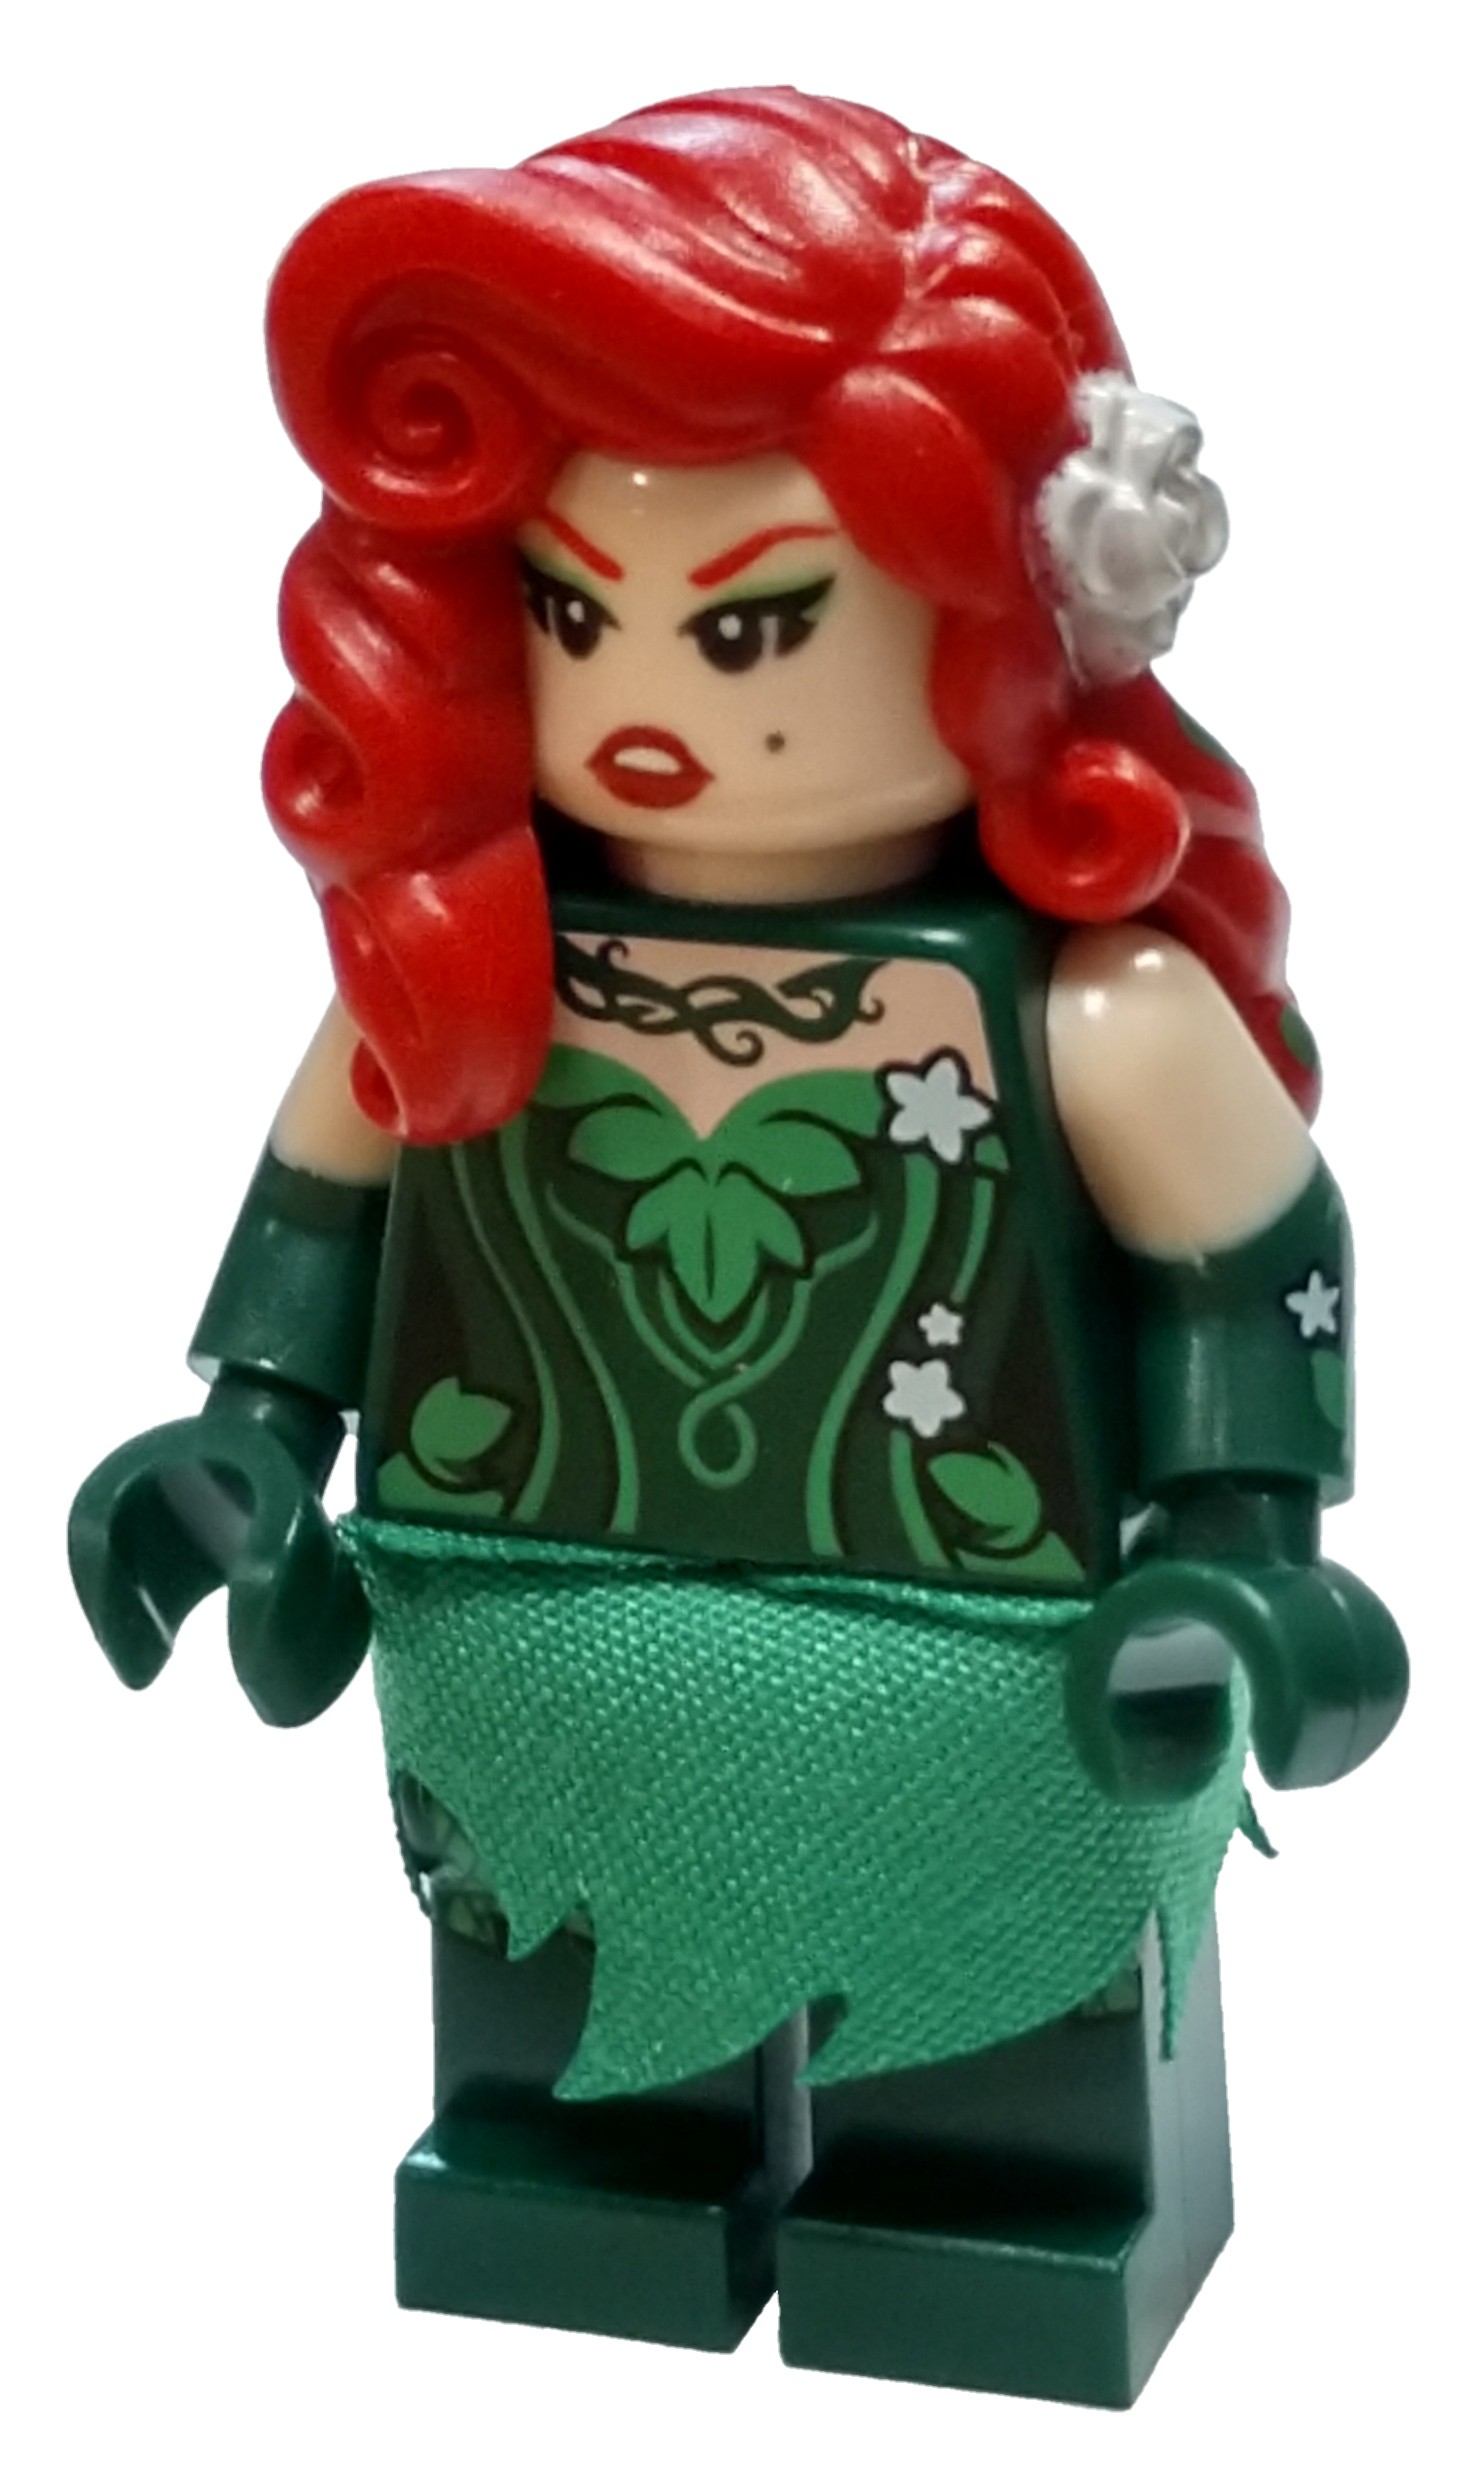 TYPE MINI FIGURINE LEGO SERIE batman poison ivy